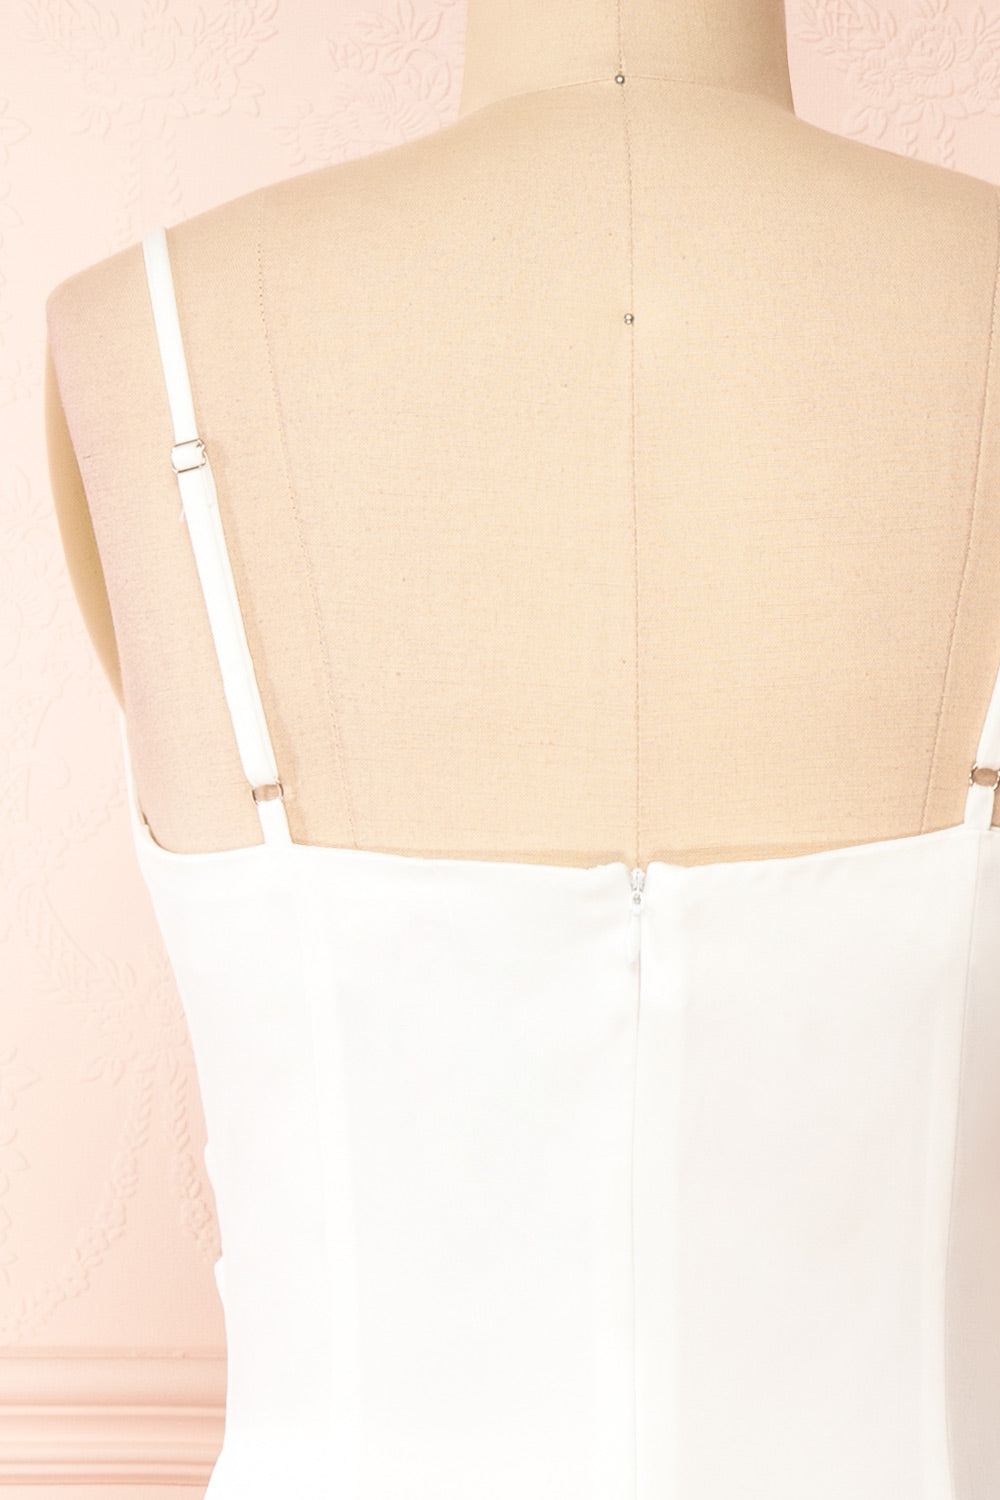 Chloe Ivory Cowl Neck Satin Midi Slip Dress | Boutique 1861 back close-up